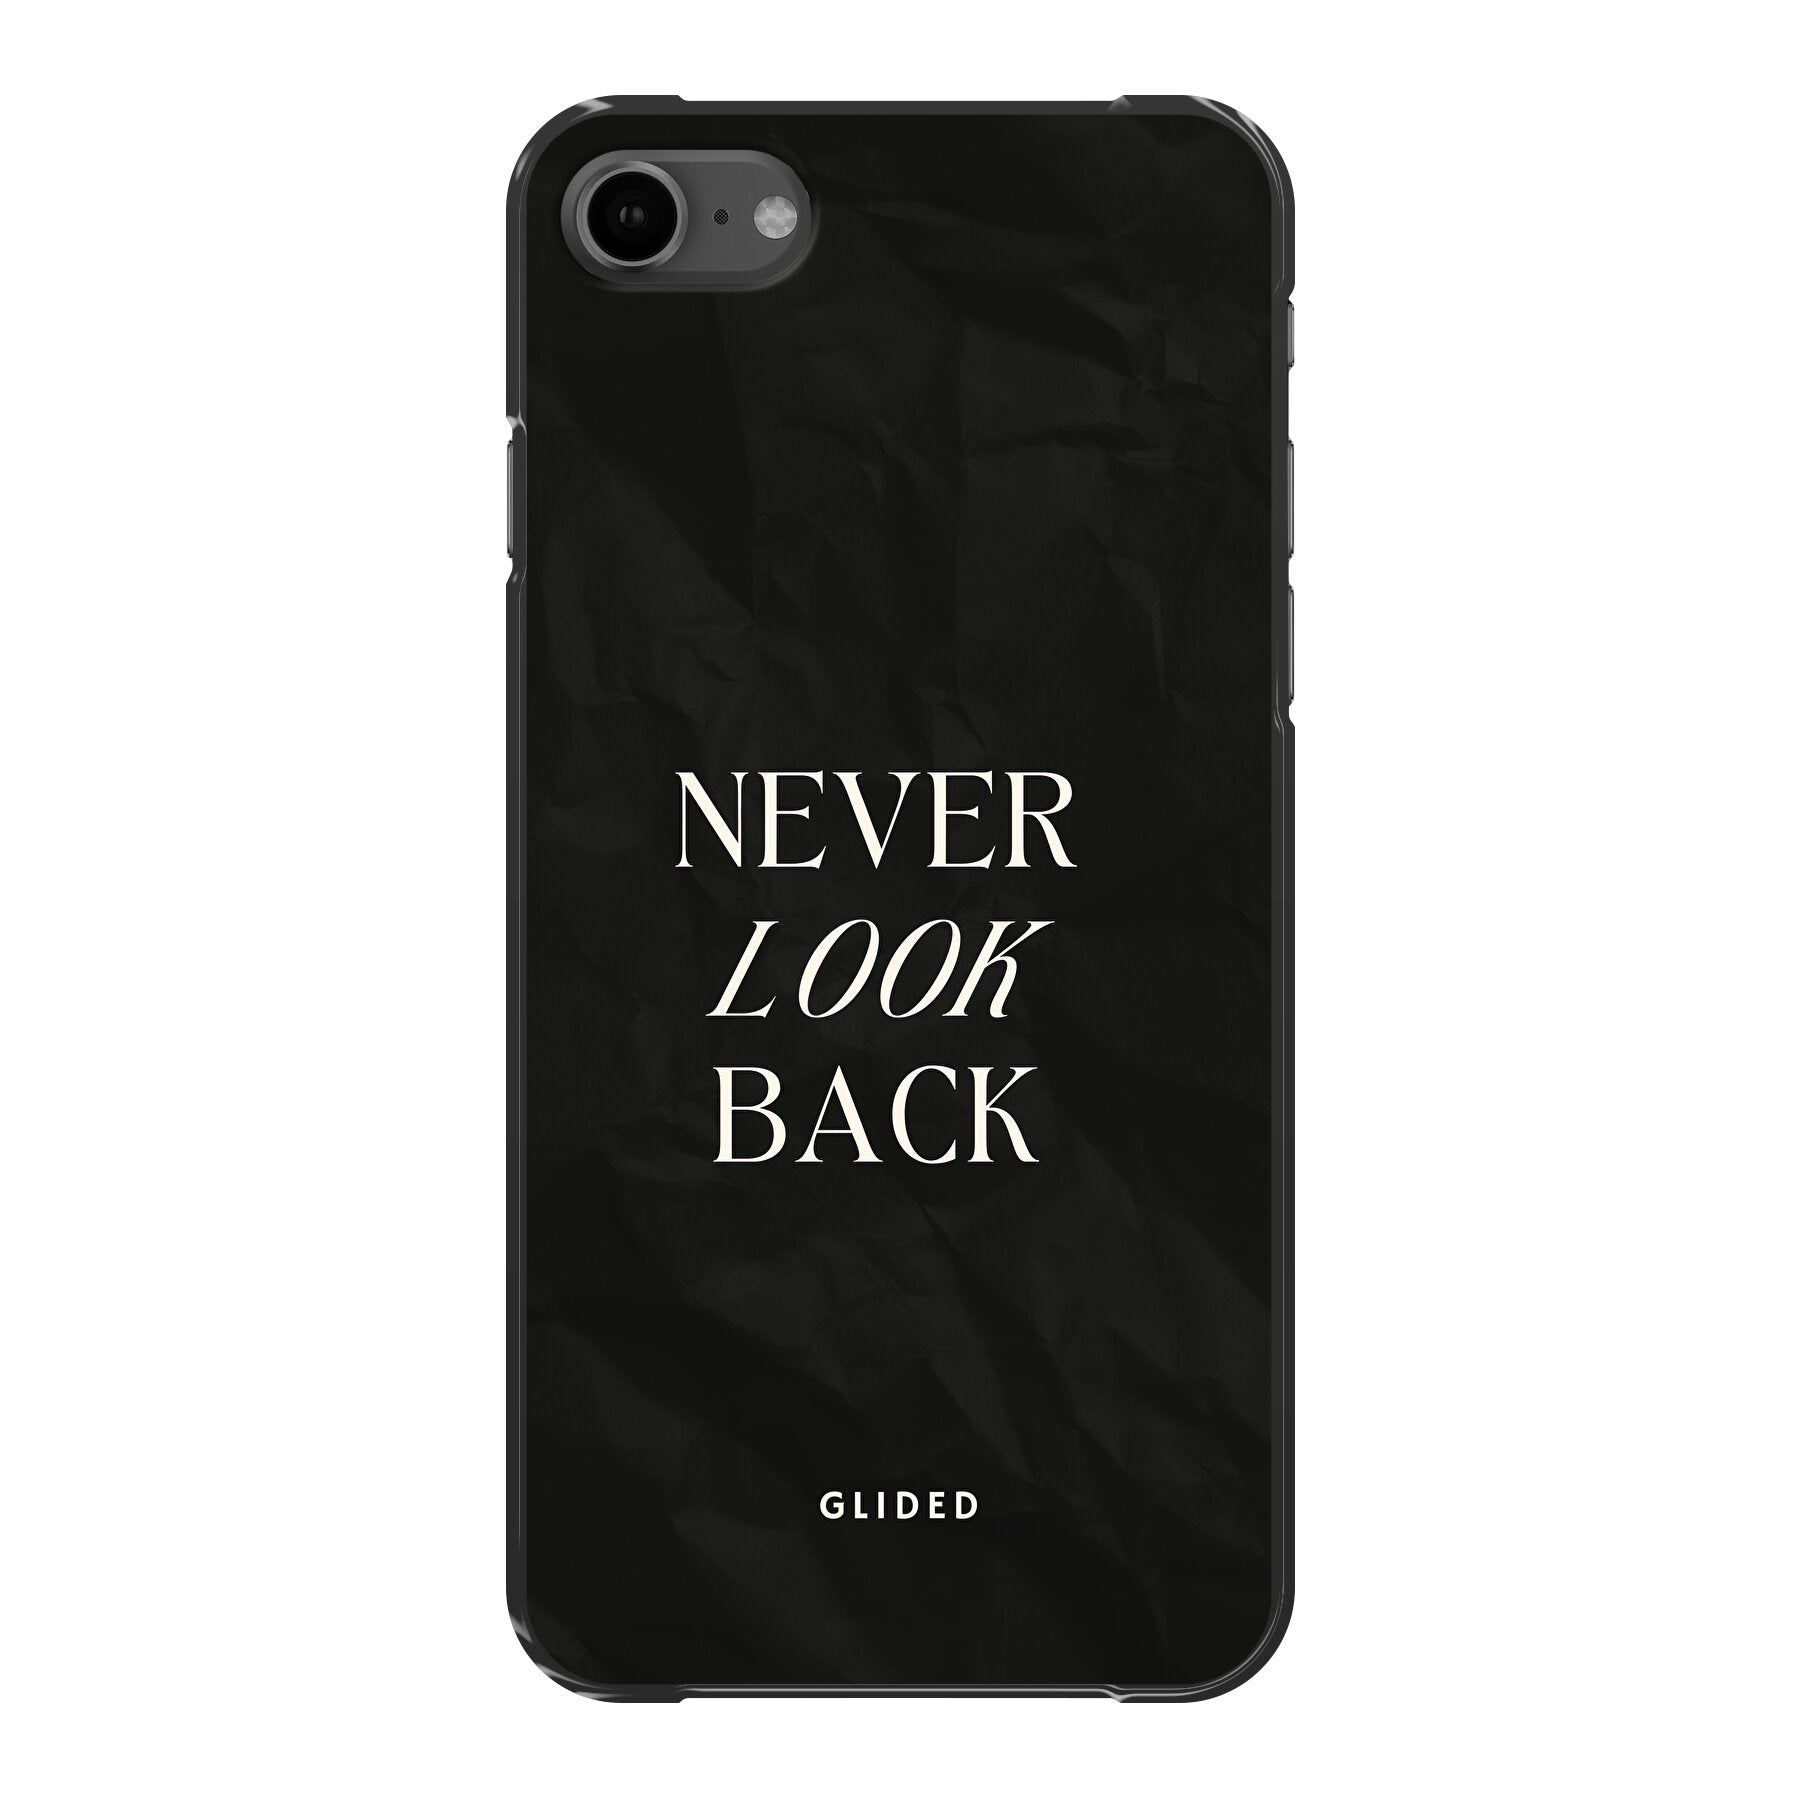 Never Back - iPhone 8 Handyhülle Hard Case